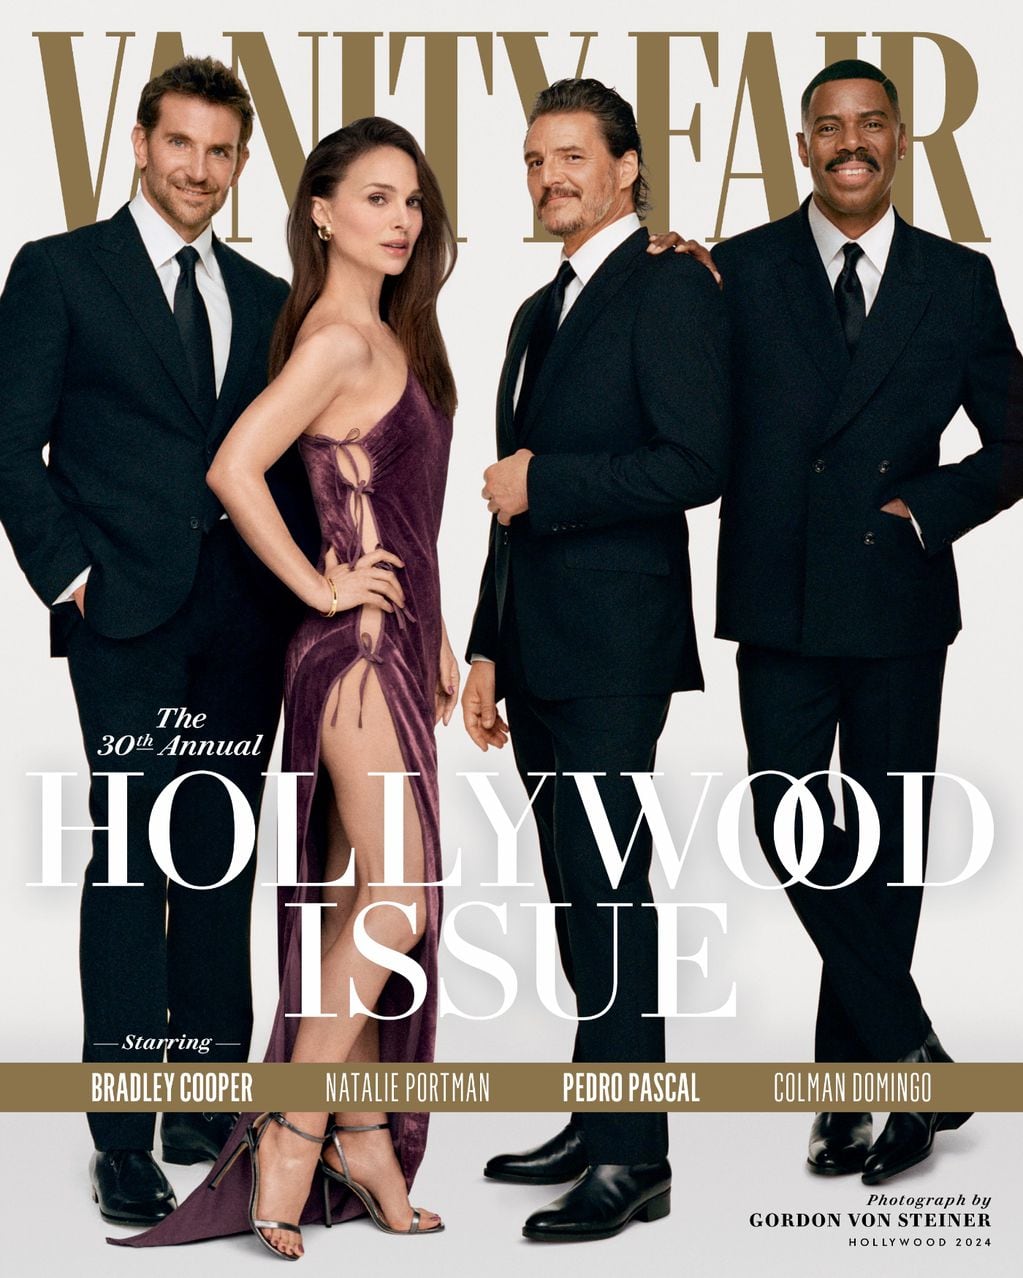 Junto a estrellas como Natalie Portman: Pedro Pascal se luce en la portada de Vanity Fair.